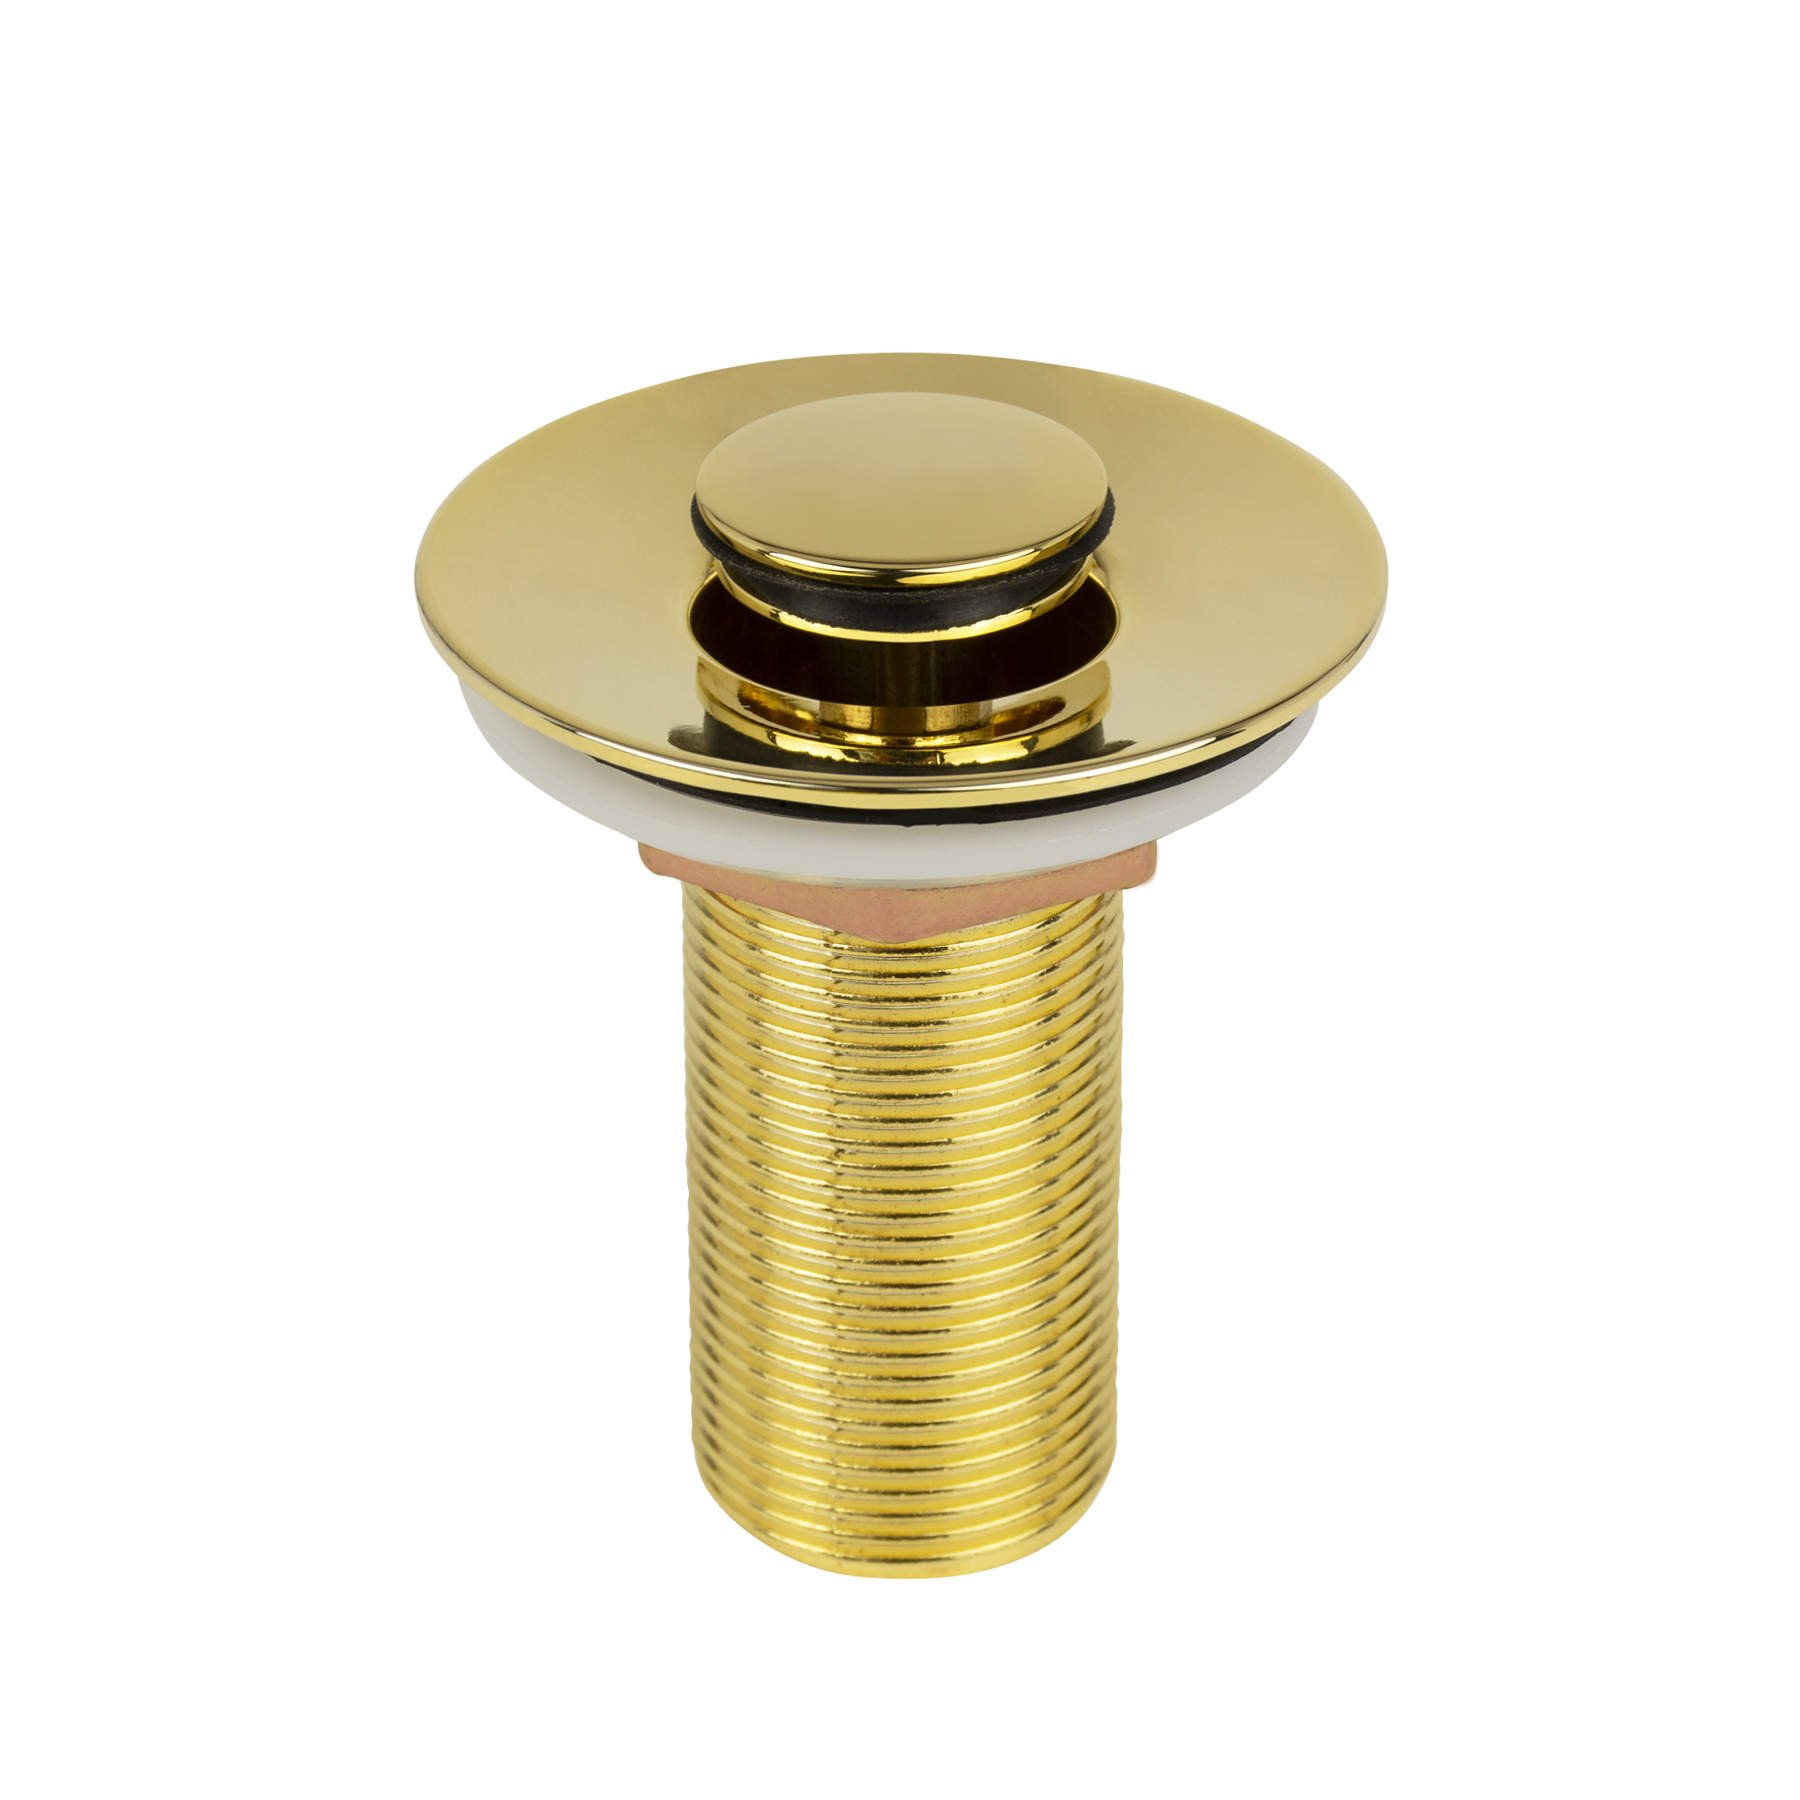 Válvula de Escoamento 7/8” Dourada para Lavatório Click Up Tampa Pequena Gold Go5221 Ducon Metais - 1